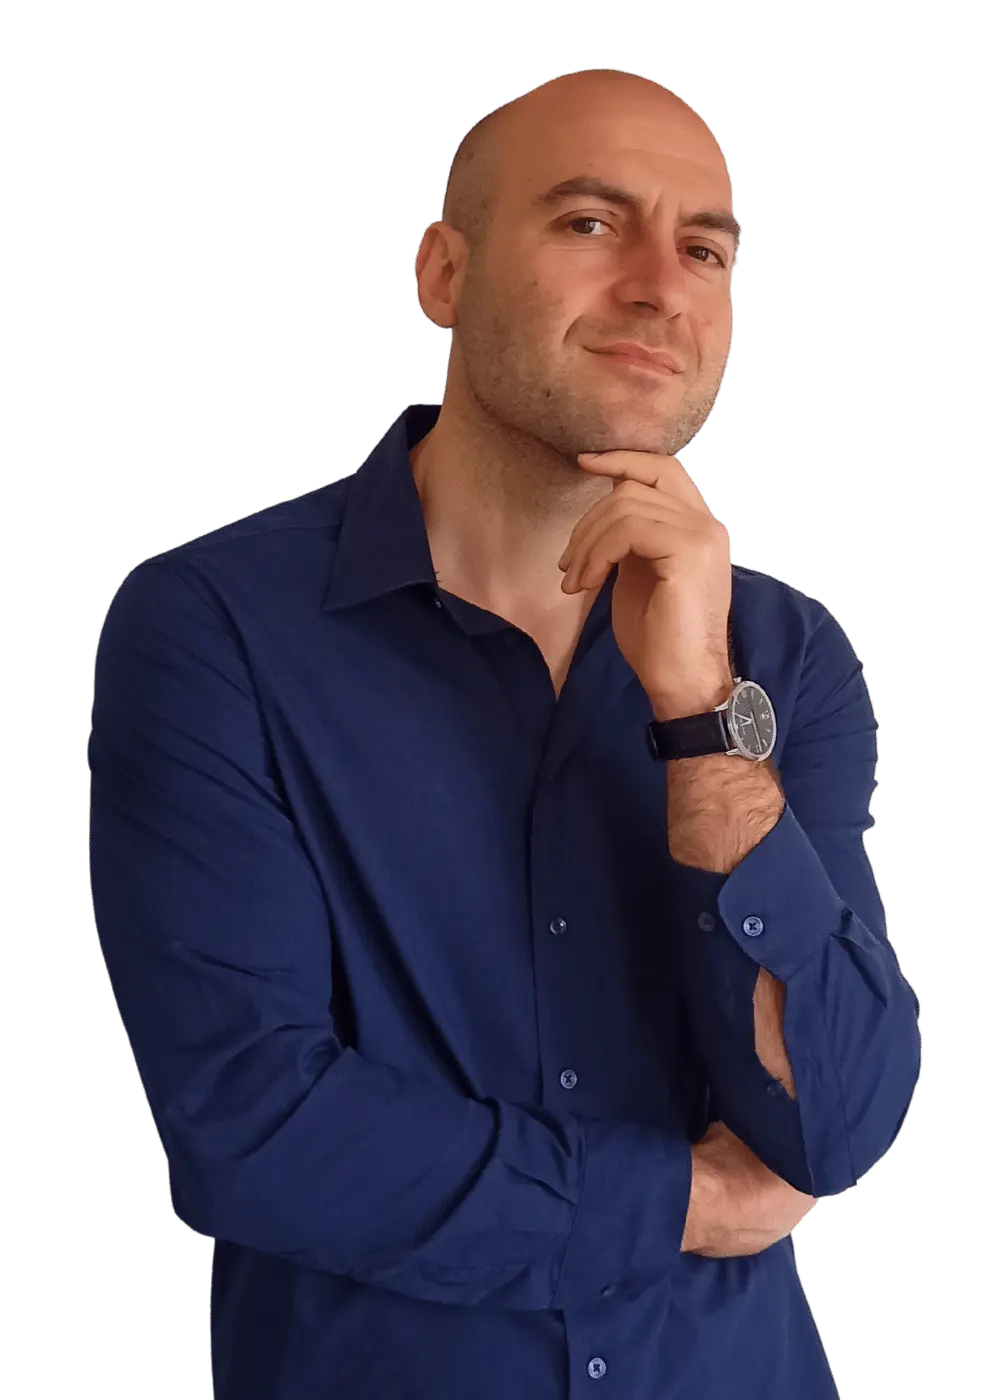 Maurizio Belviso digital marketer